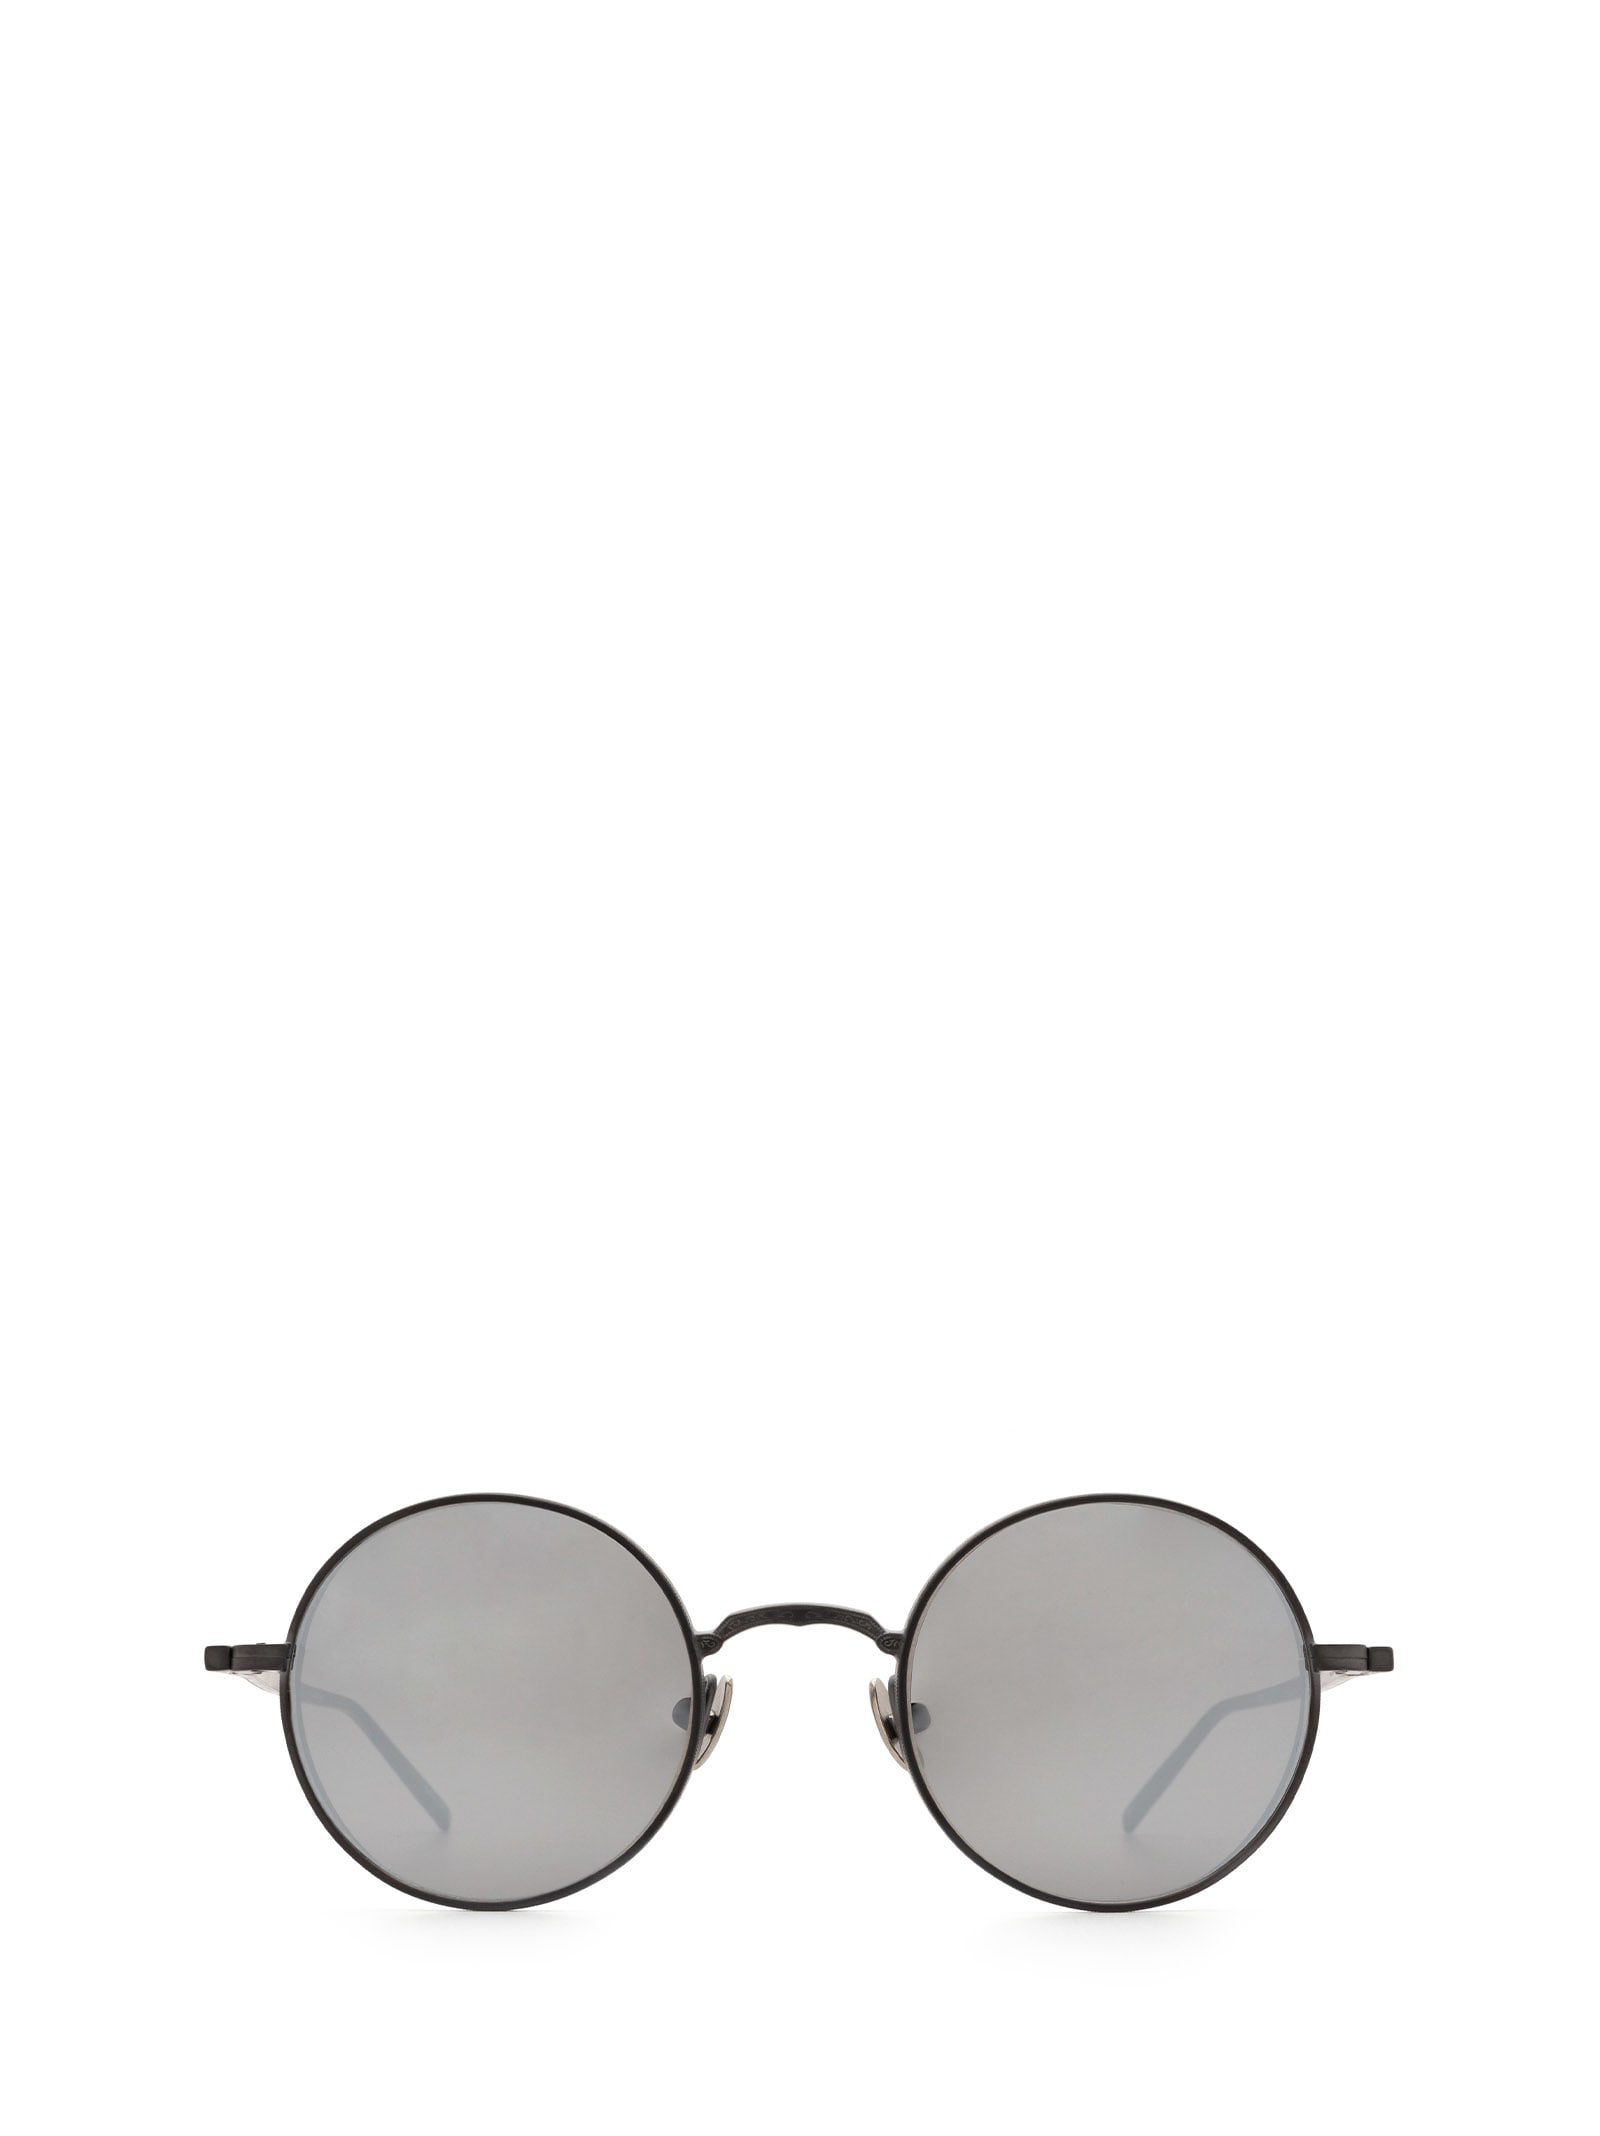 Matsuda M3087 Matte Black Sunglasses